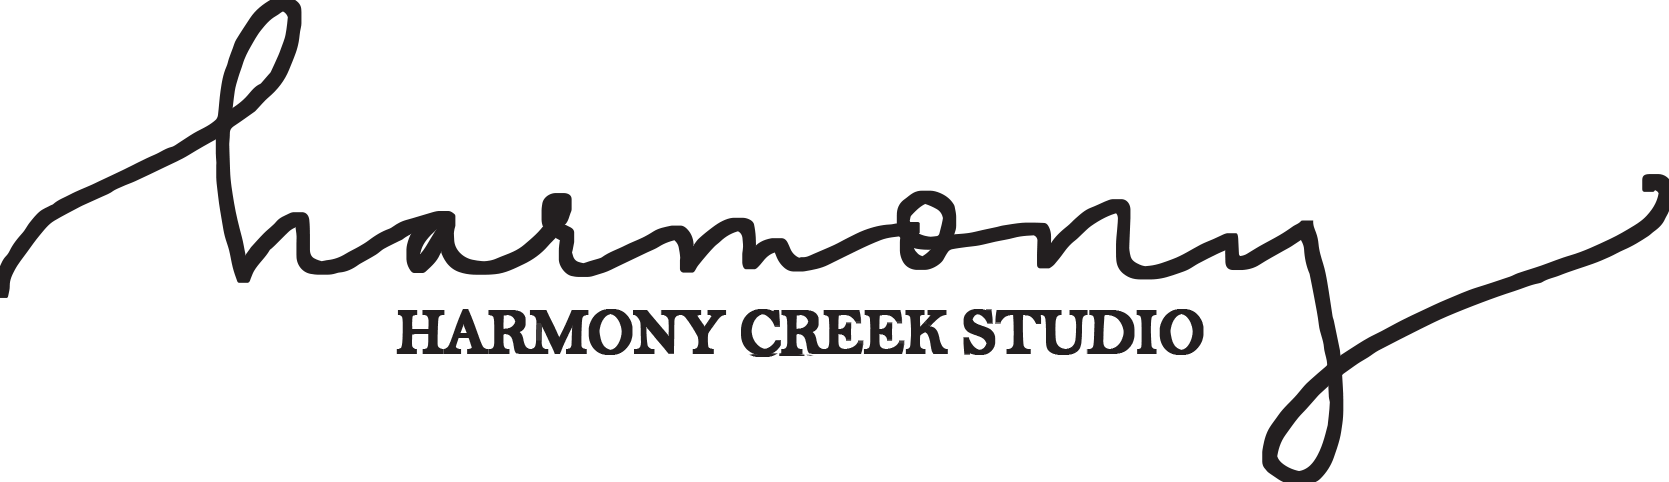 Harmony Creek Studio, LLC